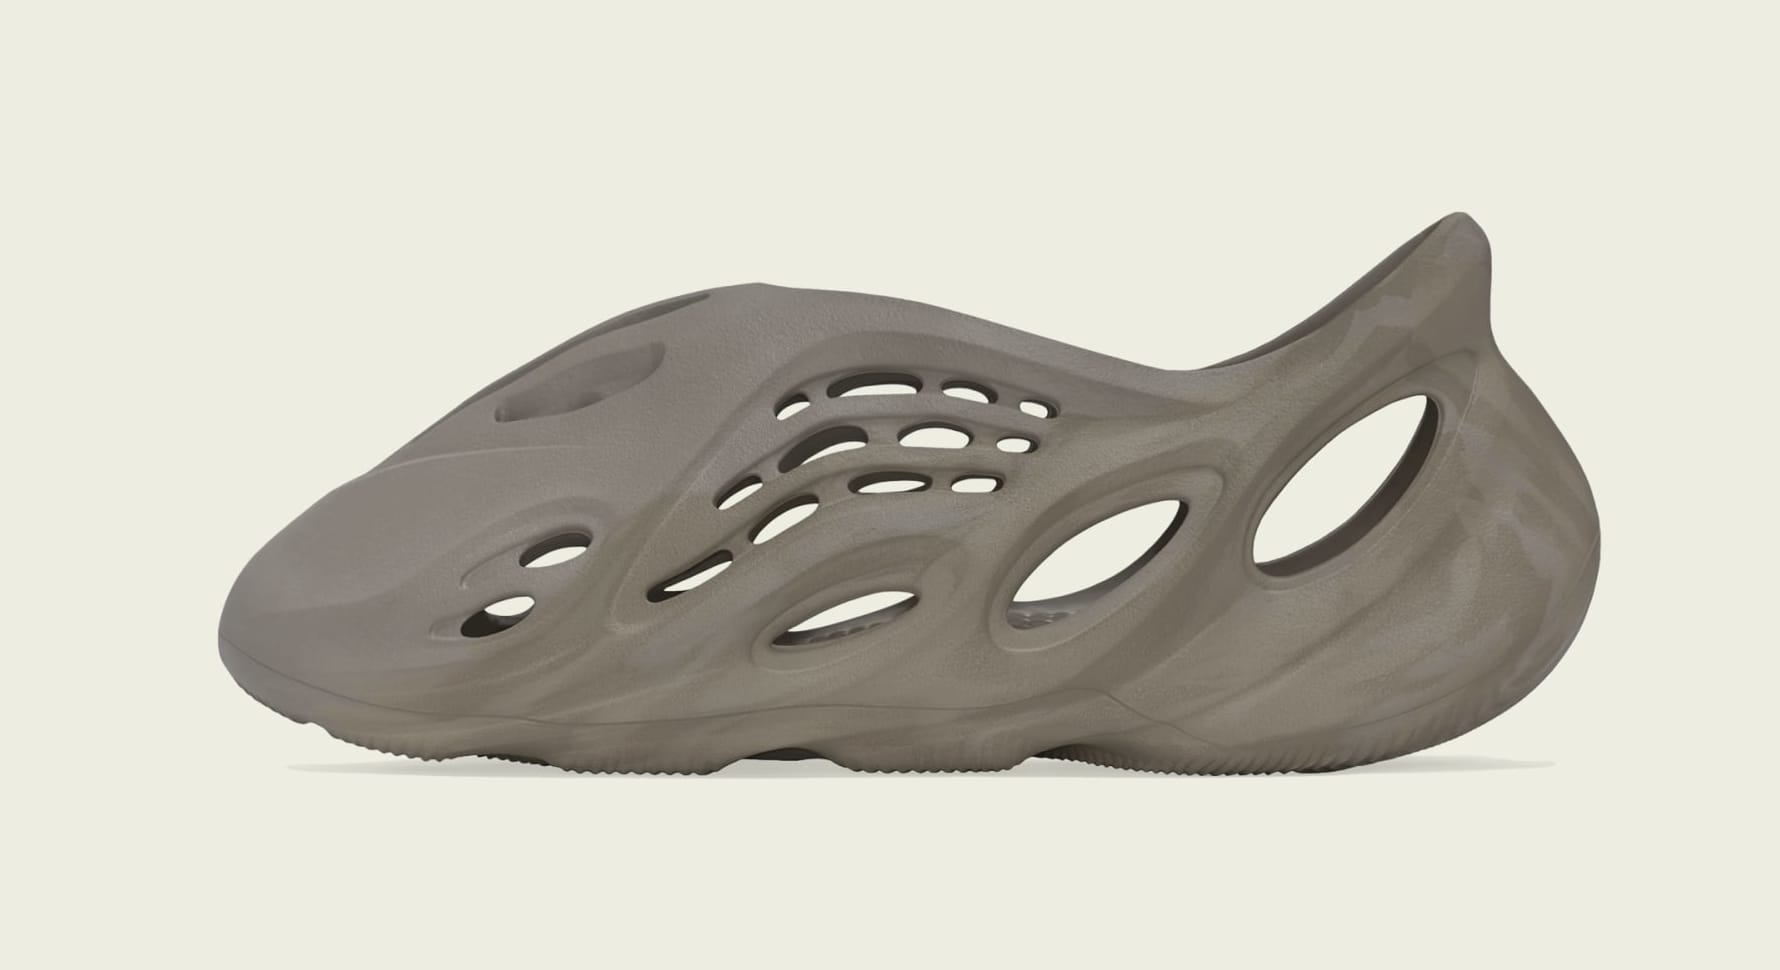 Adidas Yeezy Foam Runner 'Stone Sage'  'Mist' Release Date | Sole Collector